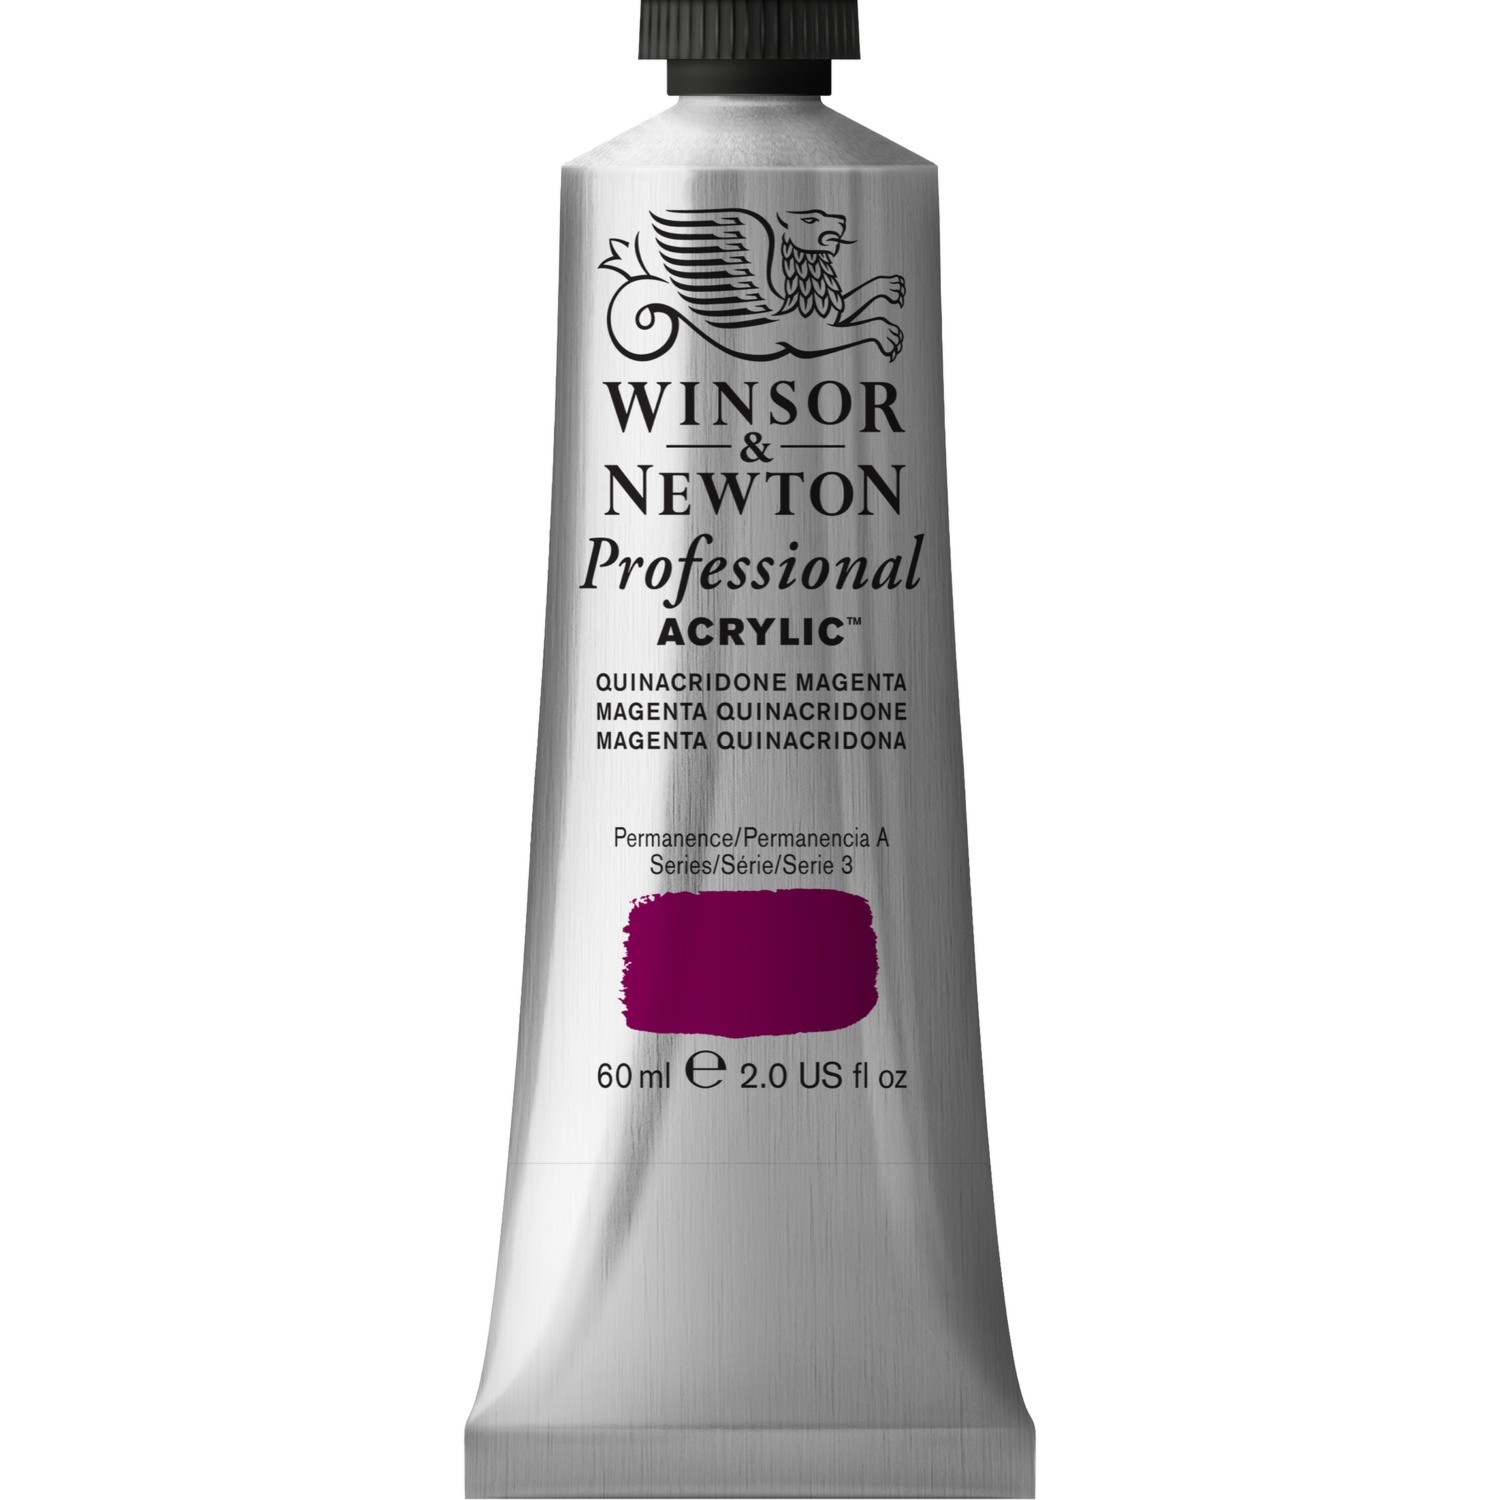 Winsor and Newton 60ml Professional Acrylic Paint - Magenta Image 1